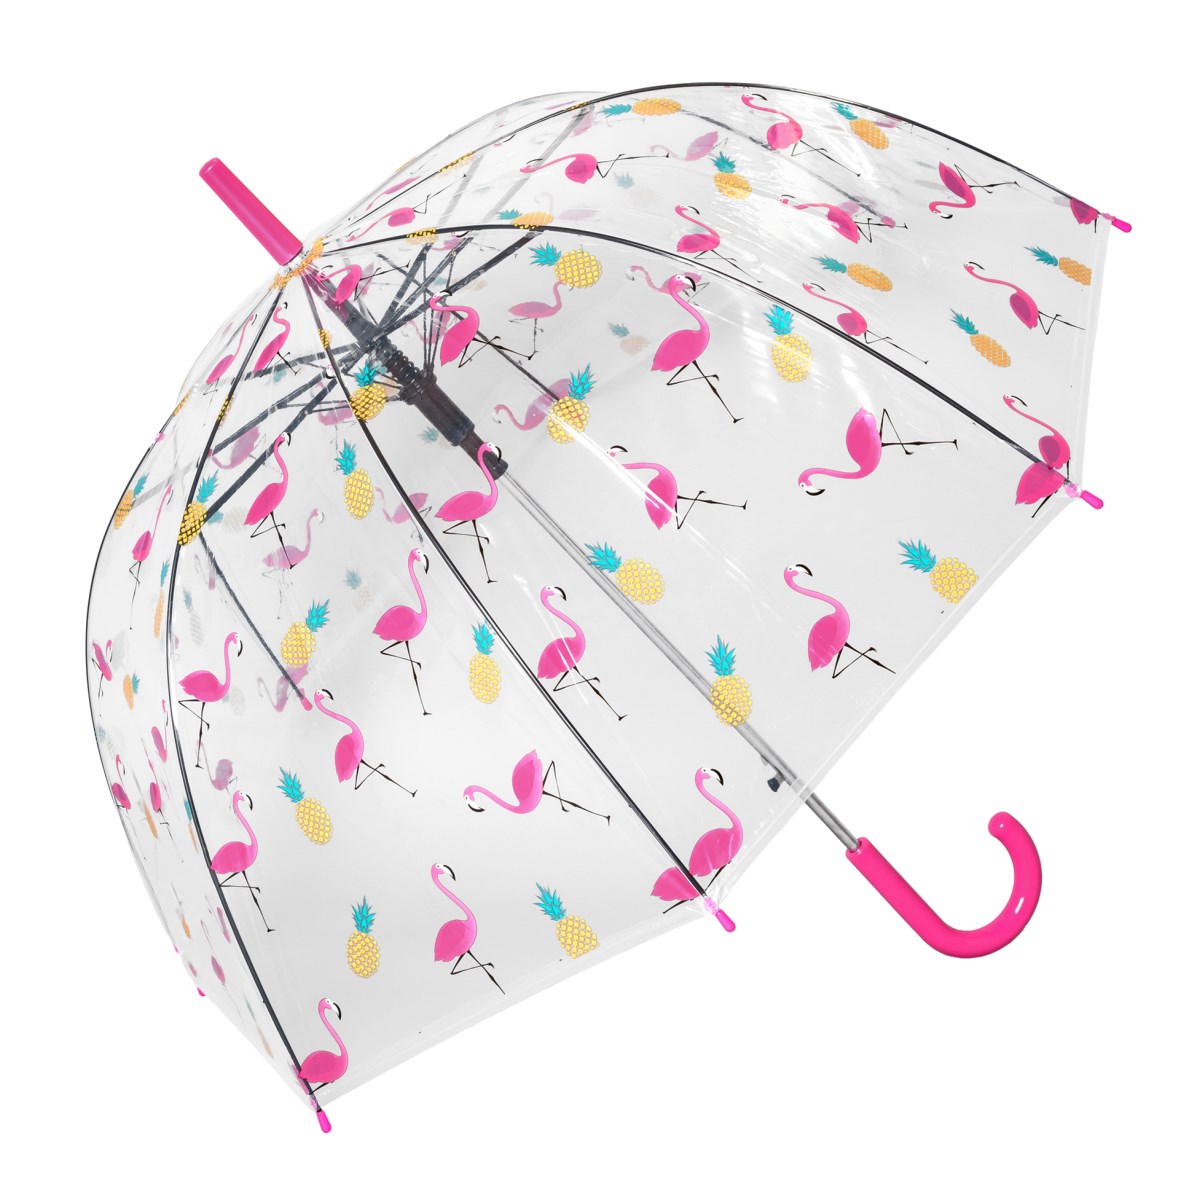 Adult flamingo dome umbrella wholesale